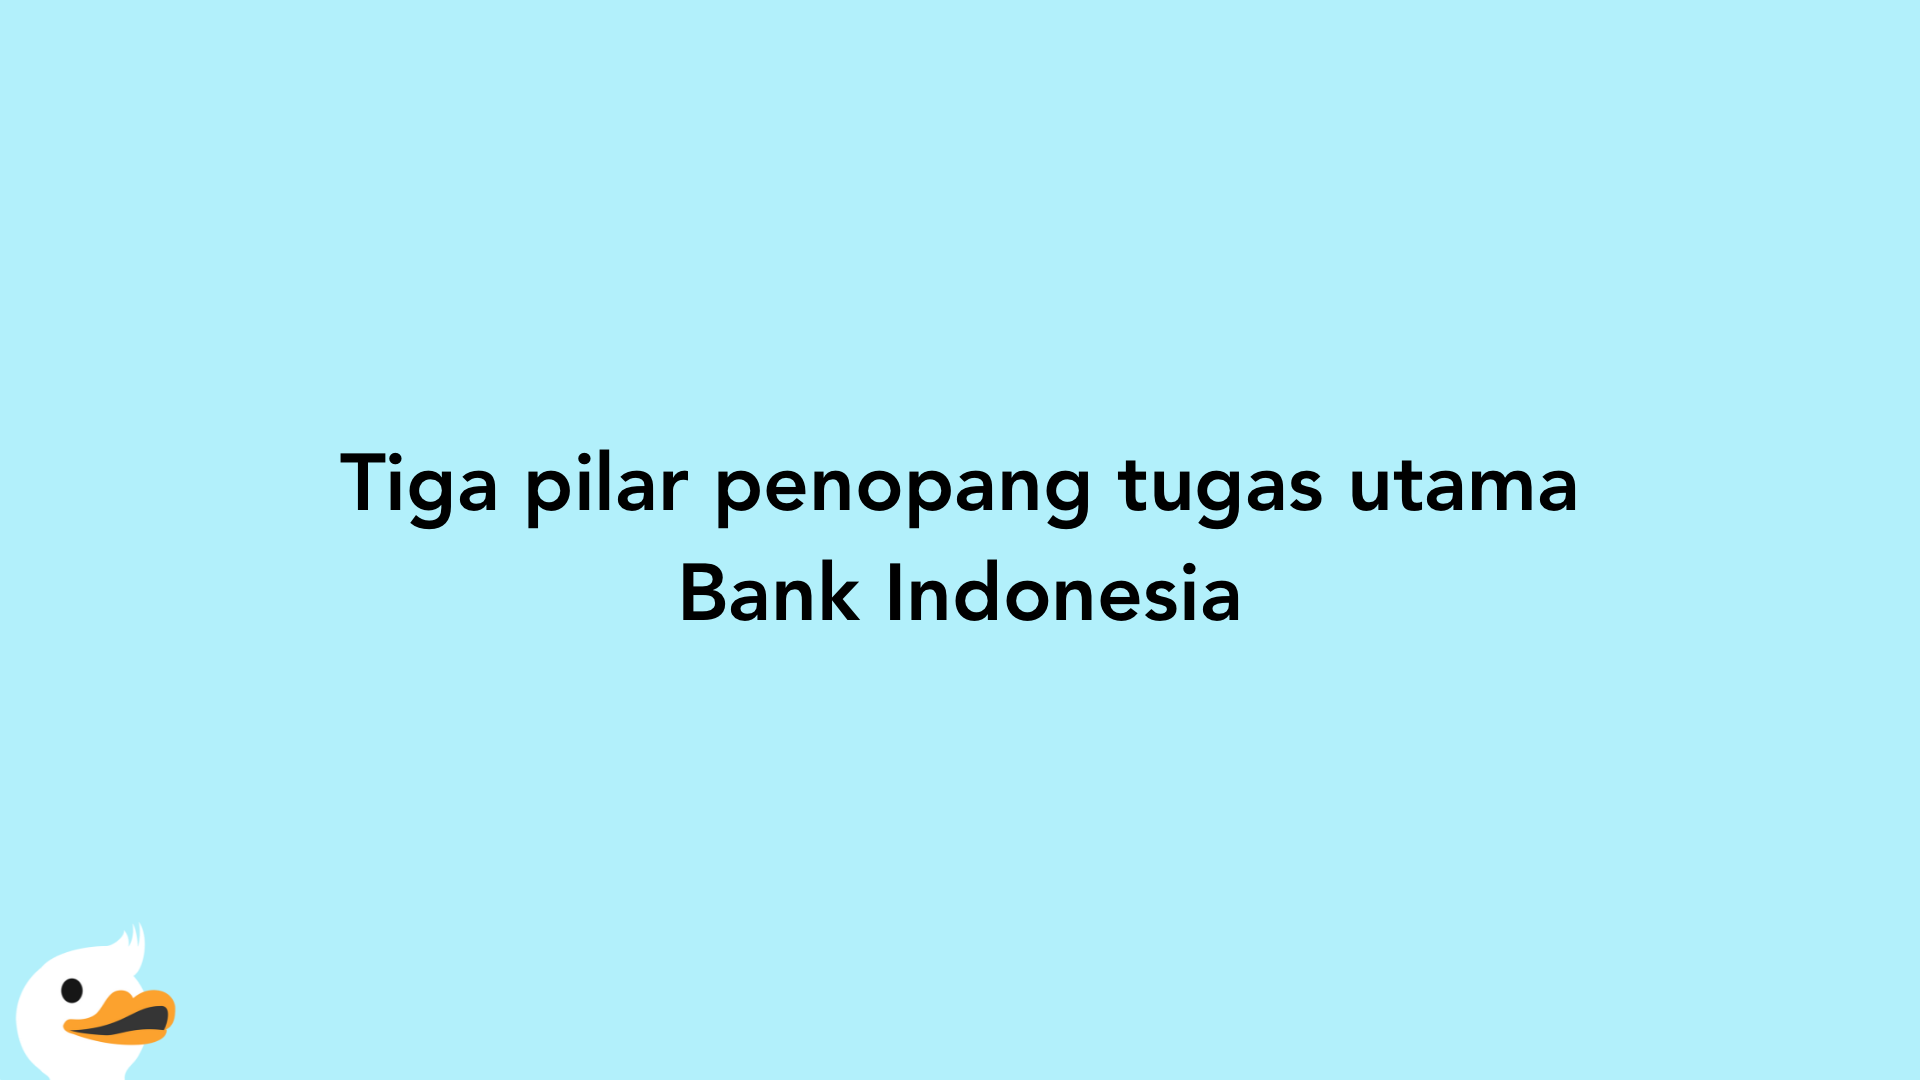 Tiga pilar penopang tugas utama Bank Indonesia